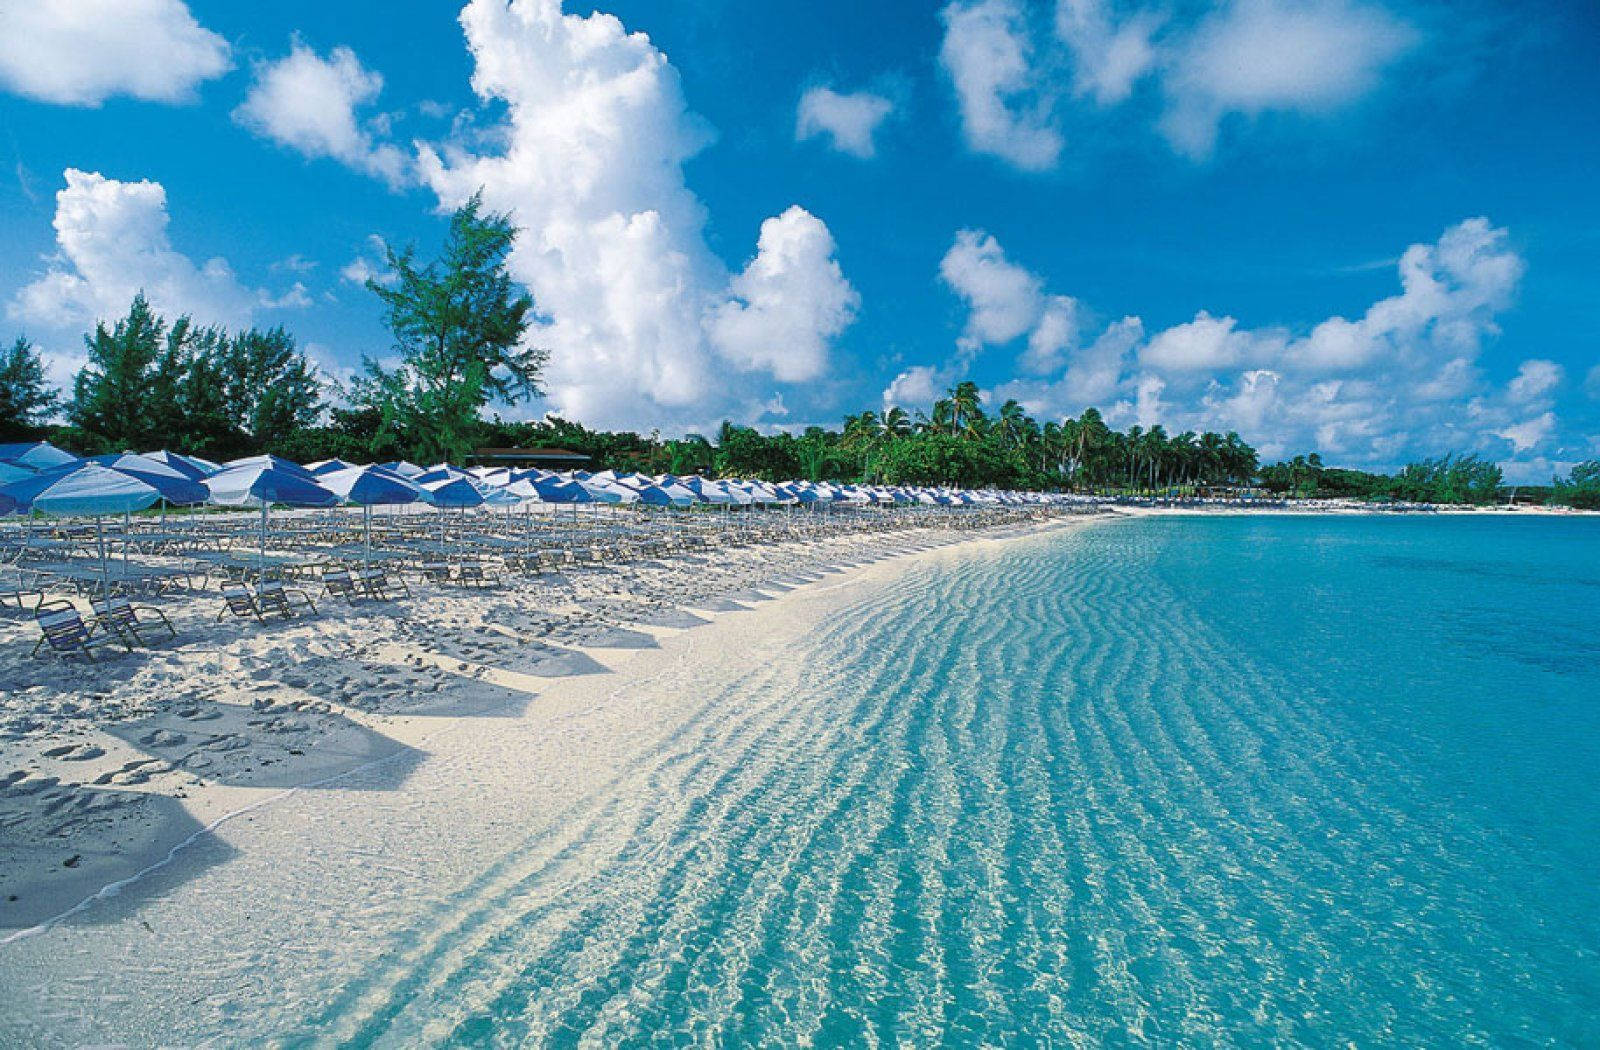 Bahamas Great Stirrup Cay